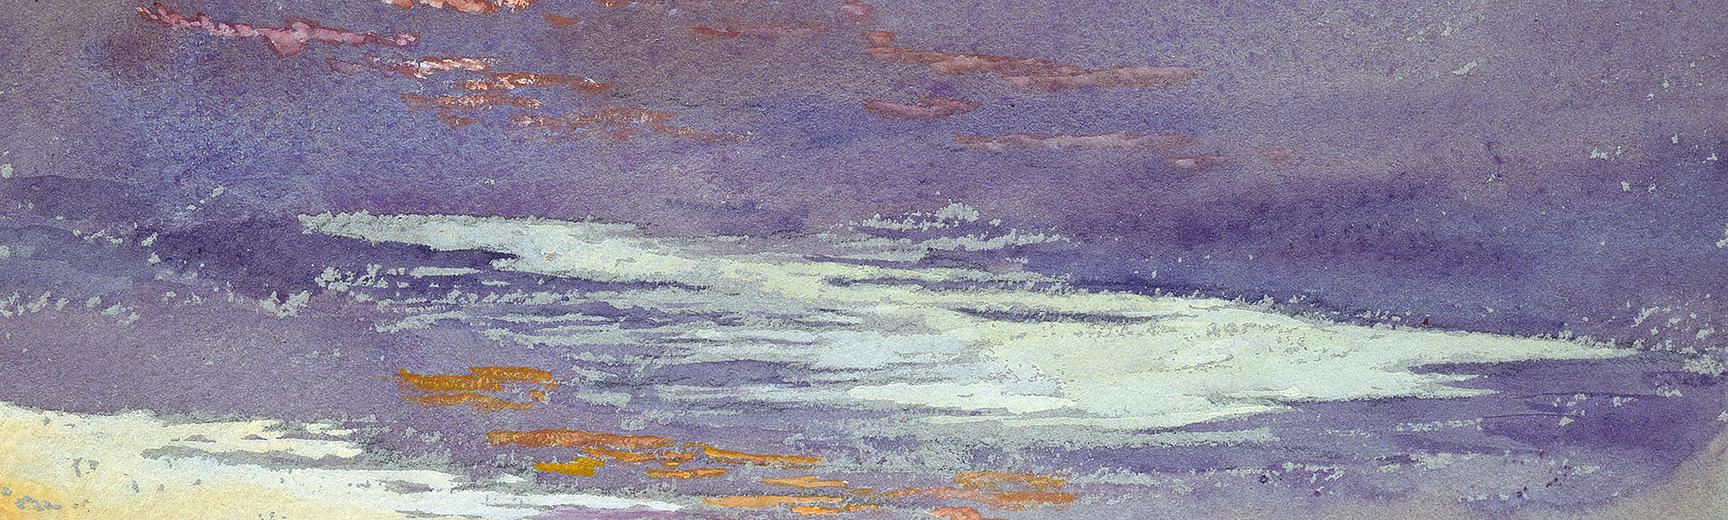 Study of Dawn, purple Clouds, 1868, watercolour